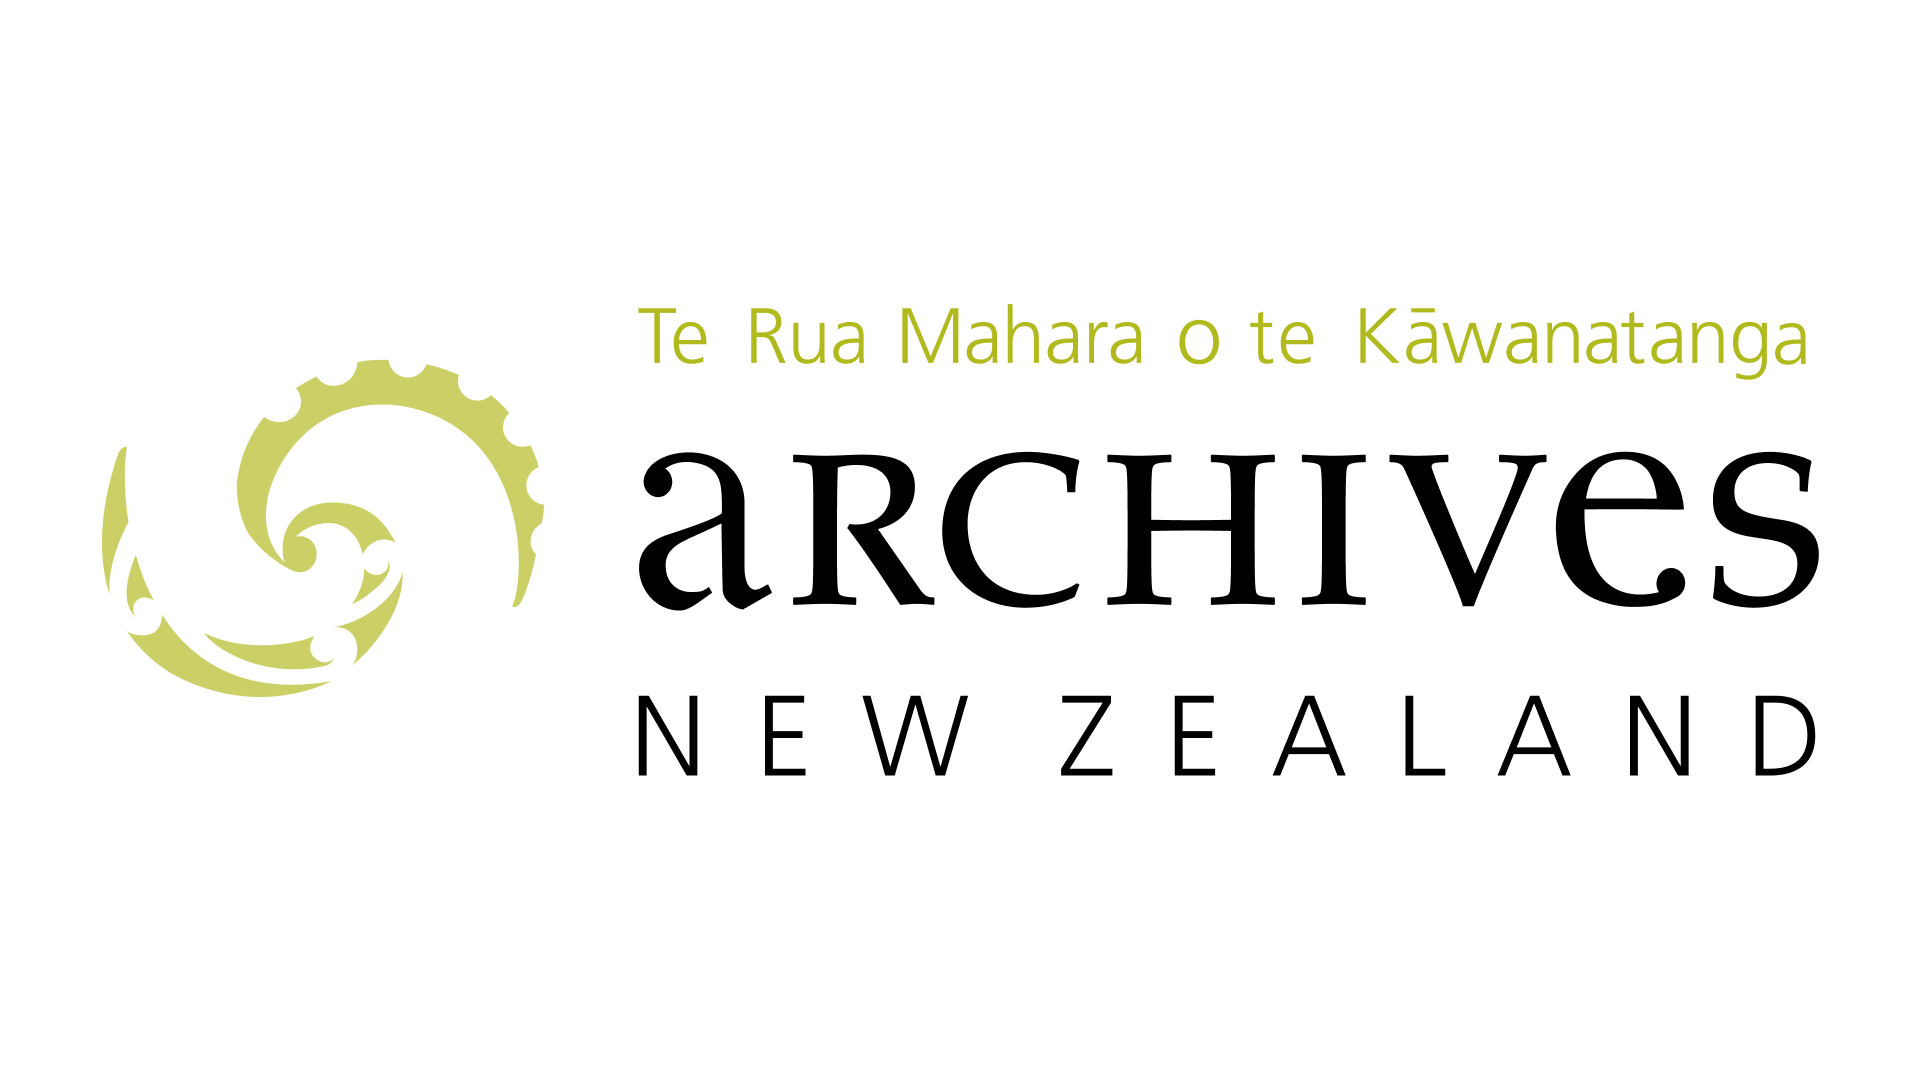 Archives NZ logo